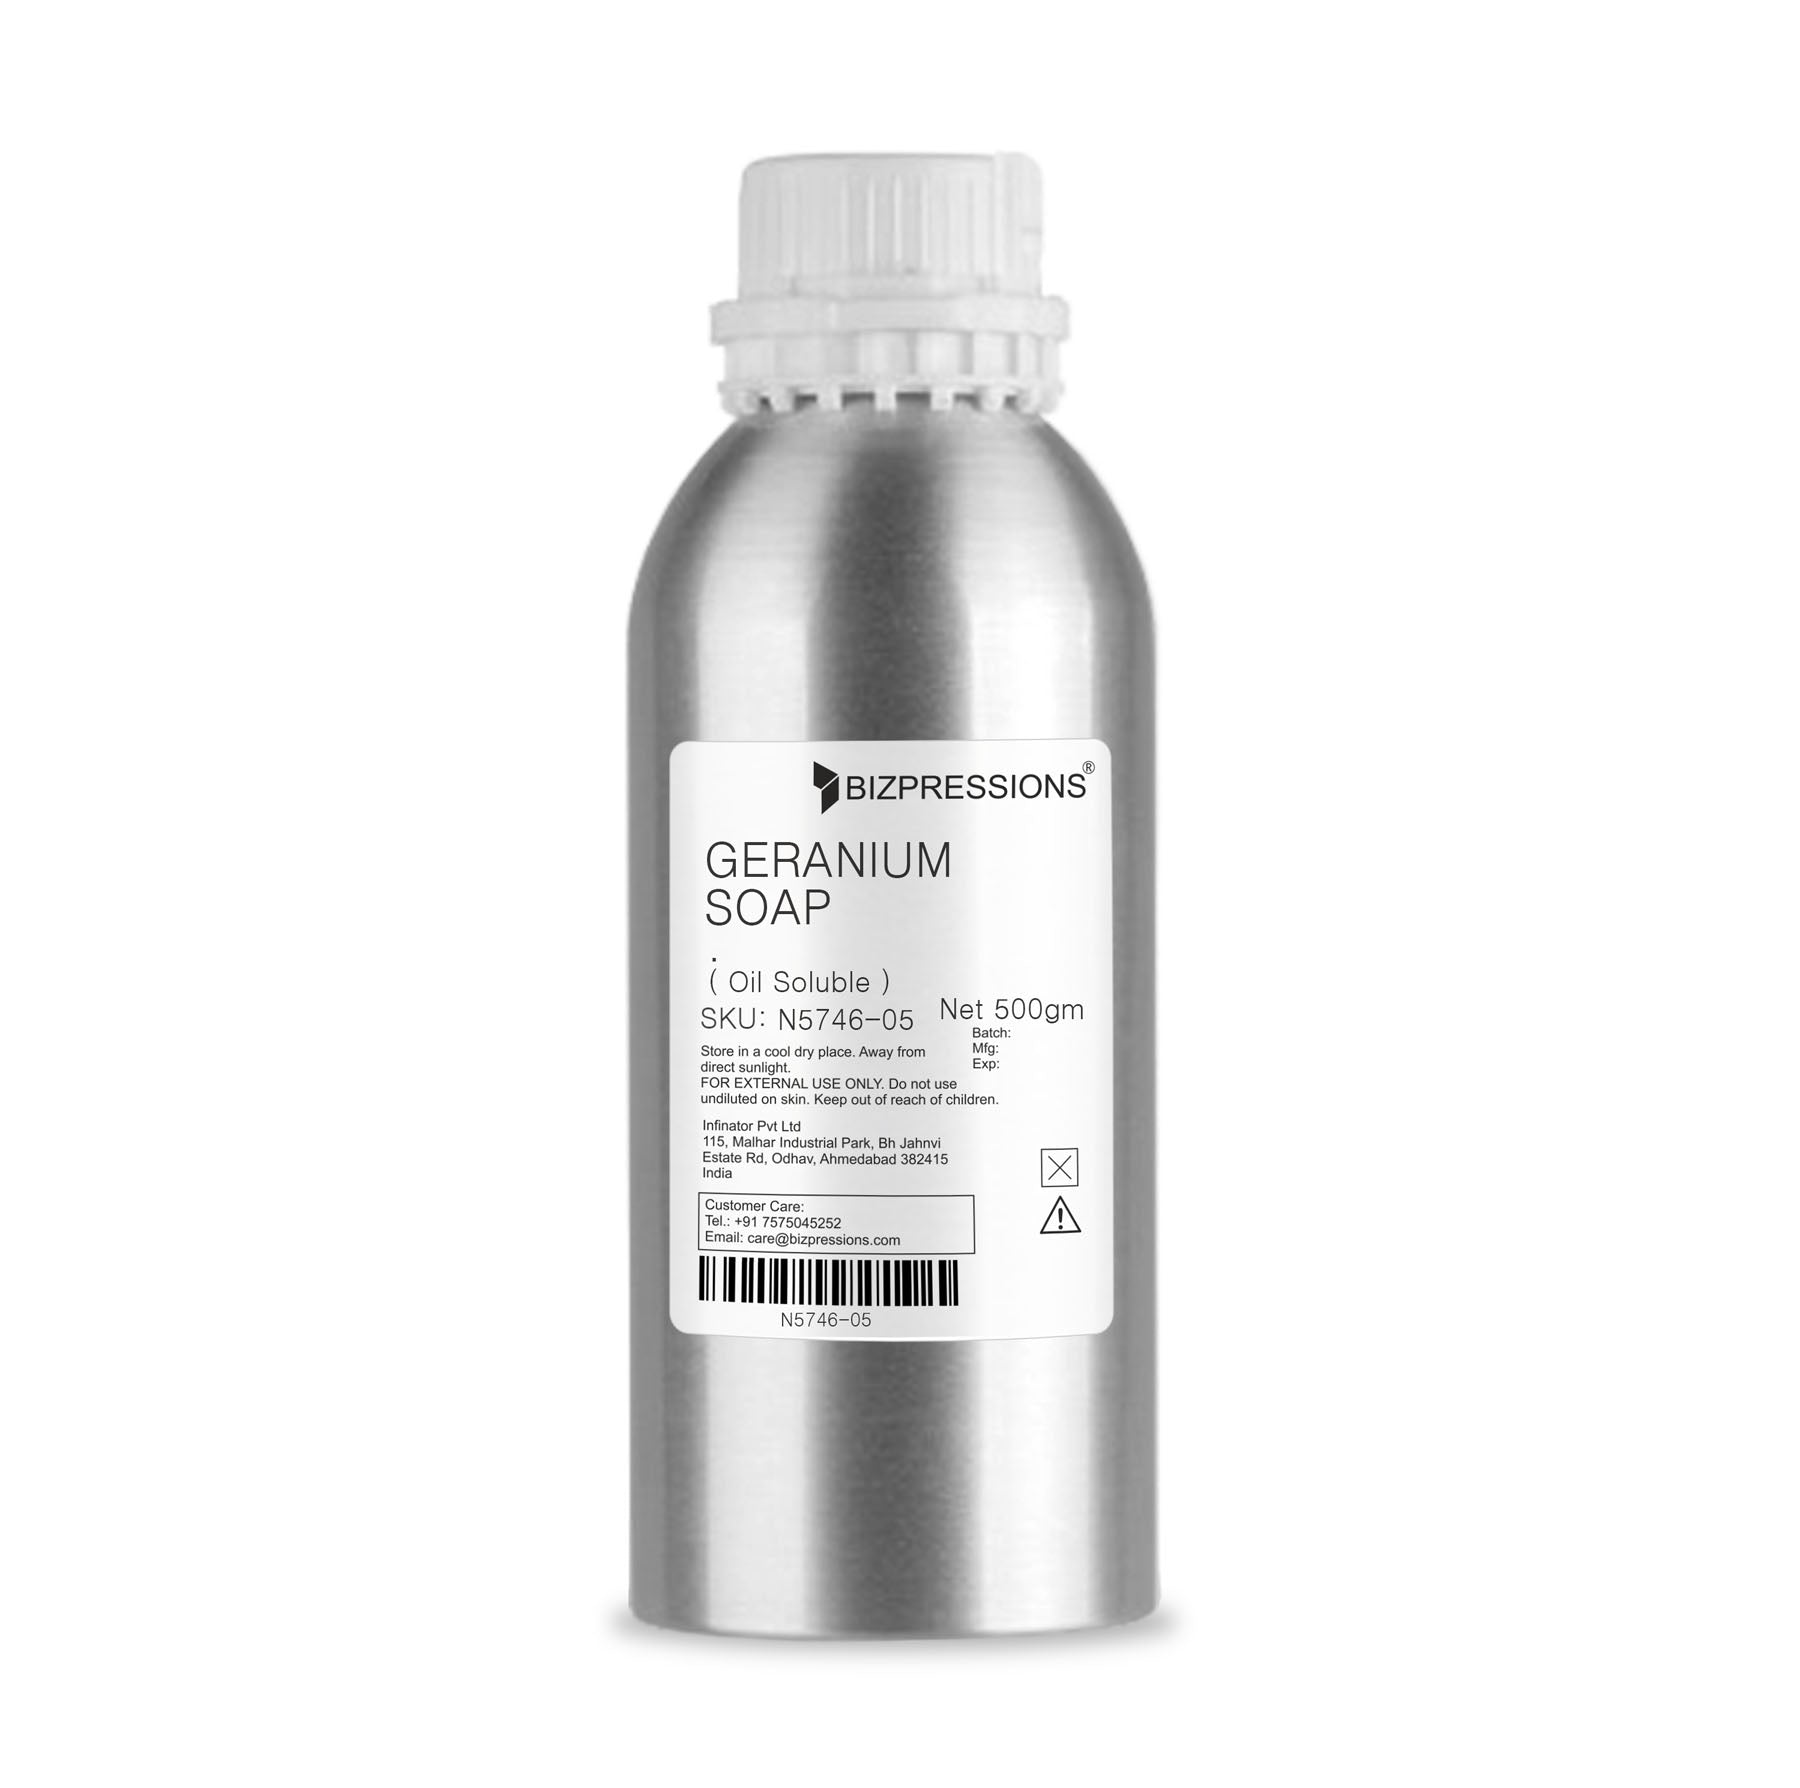 GERANIUM SOAP - Fragrance ( Oil Soluble ) - 500 gm